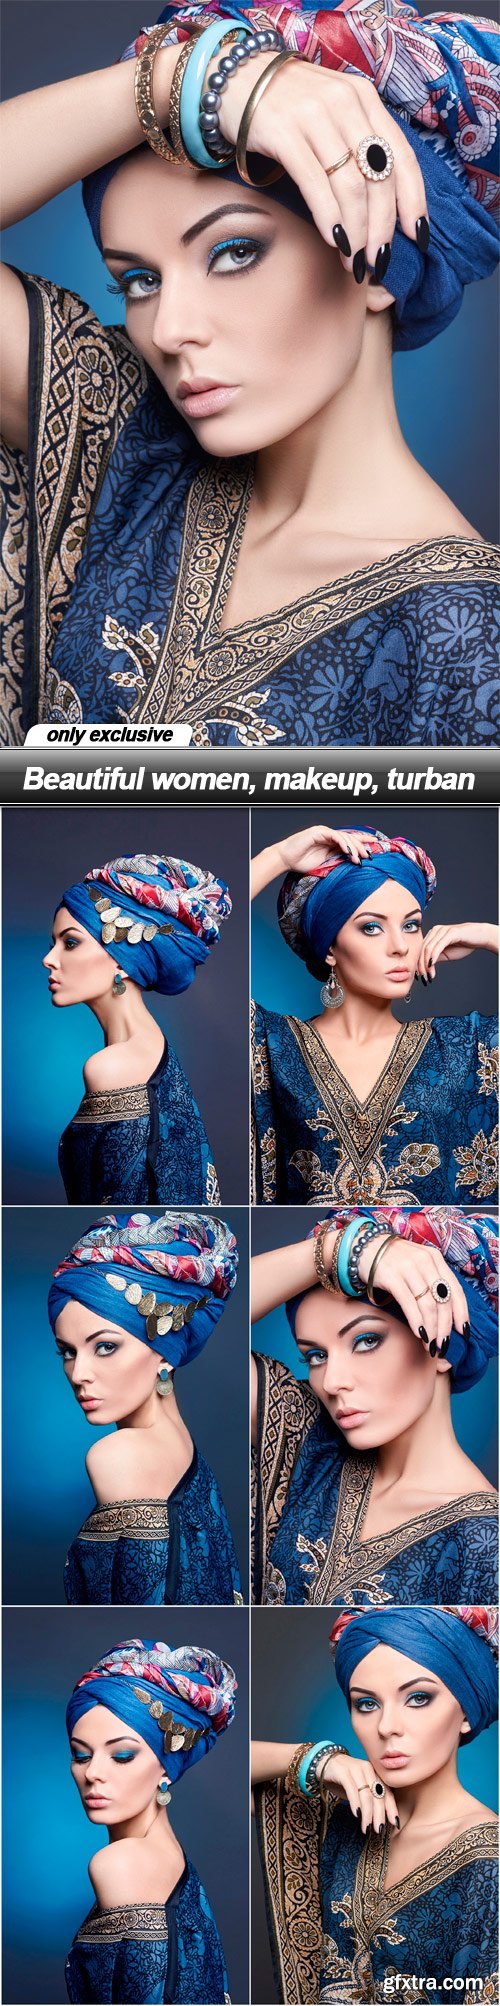 Beautiful women, makeup, turban - 6 UHQ JPEG